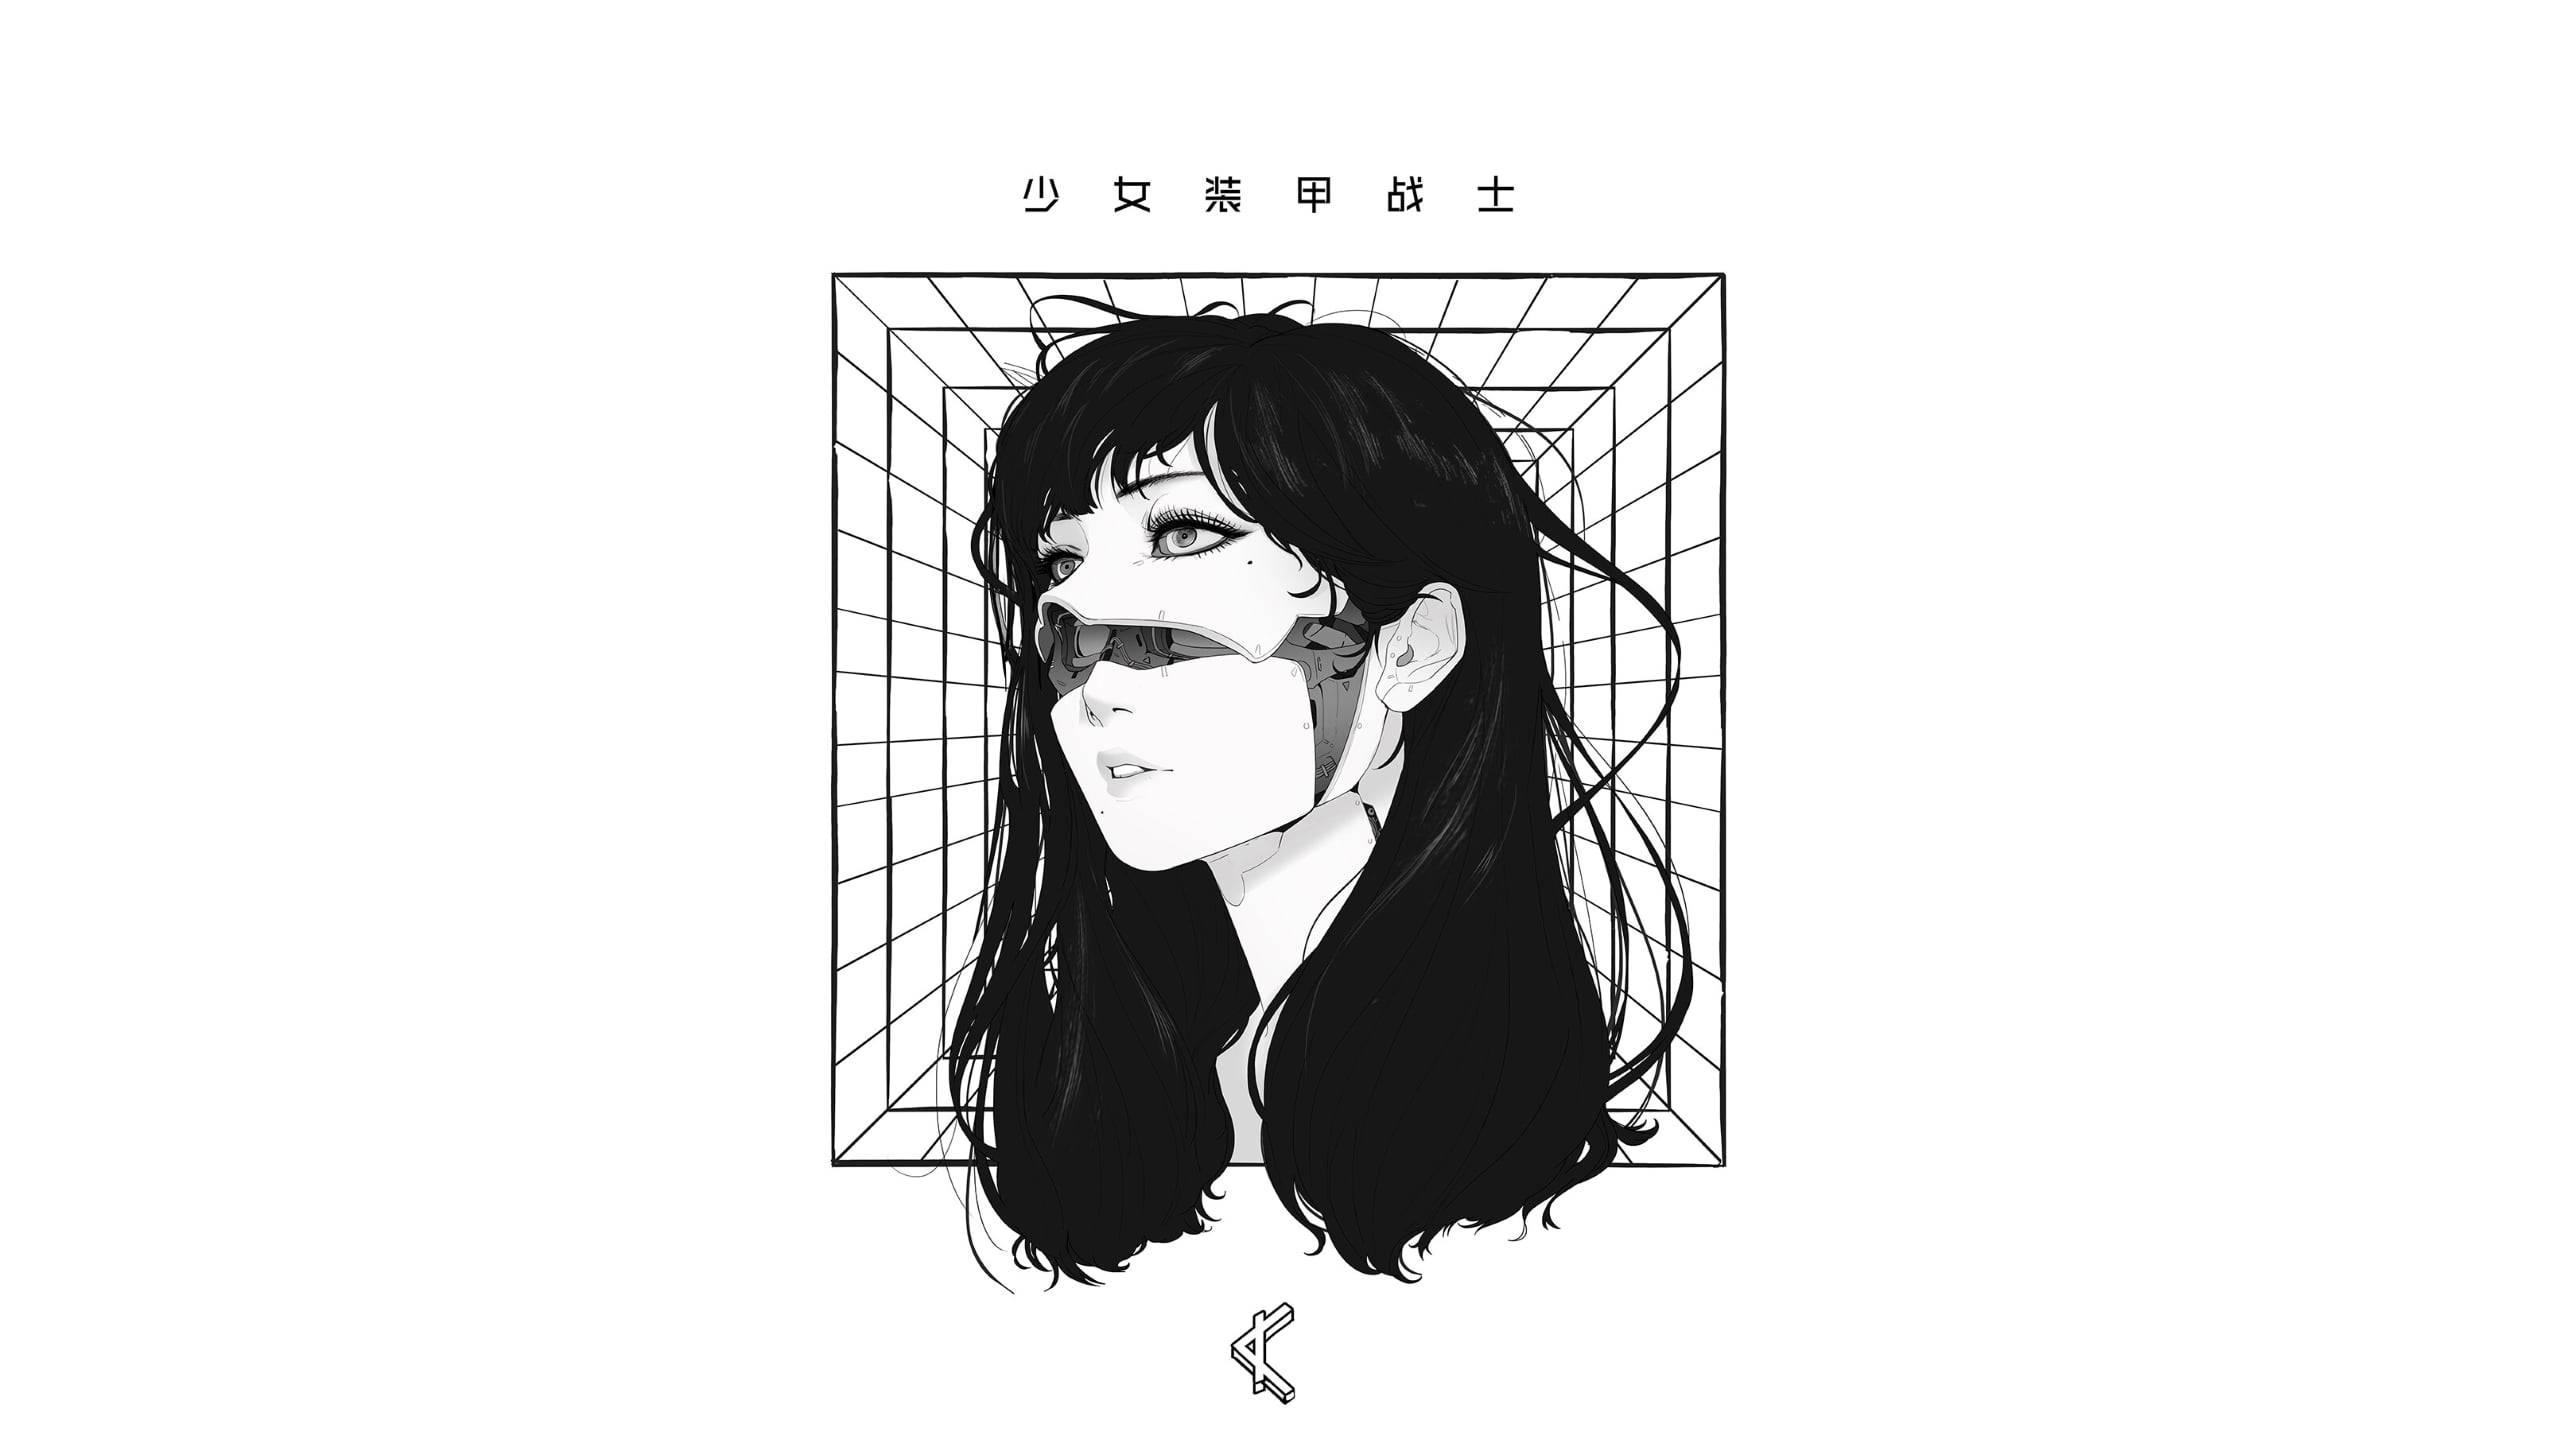 Free Sad Anime Girl Black And White Wallpaper Downloads, [100+] Sad Anime Girl  Black And White Wallpapers for FREE 